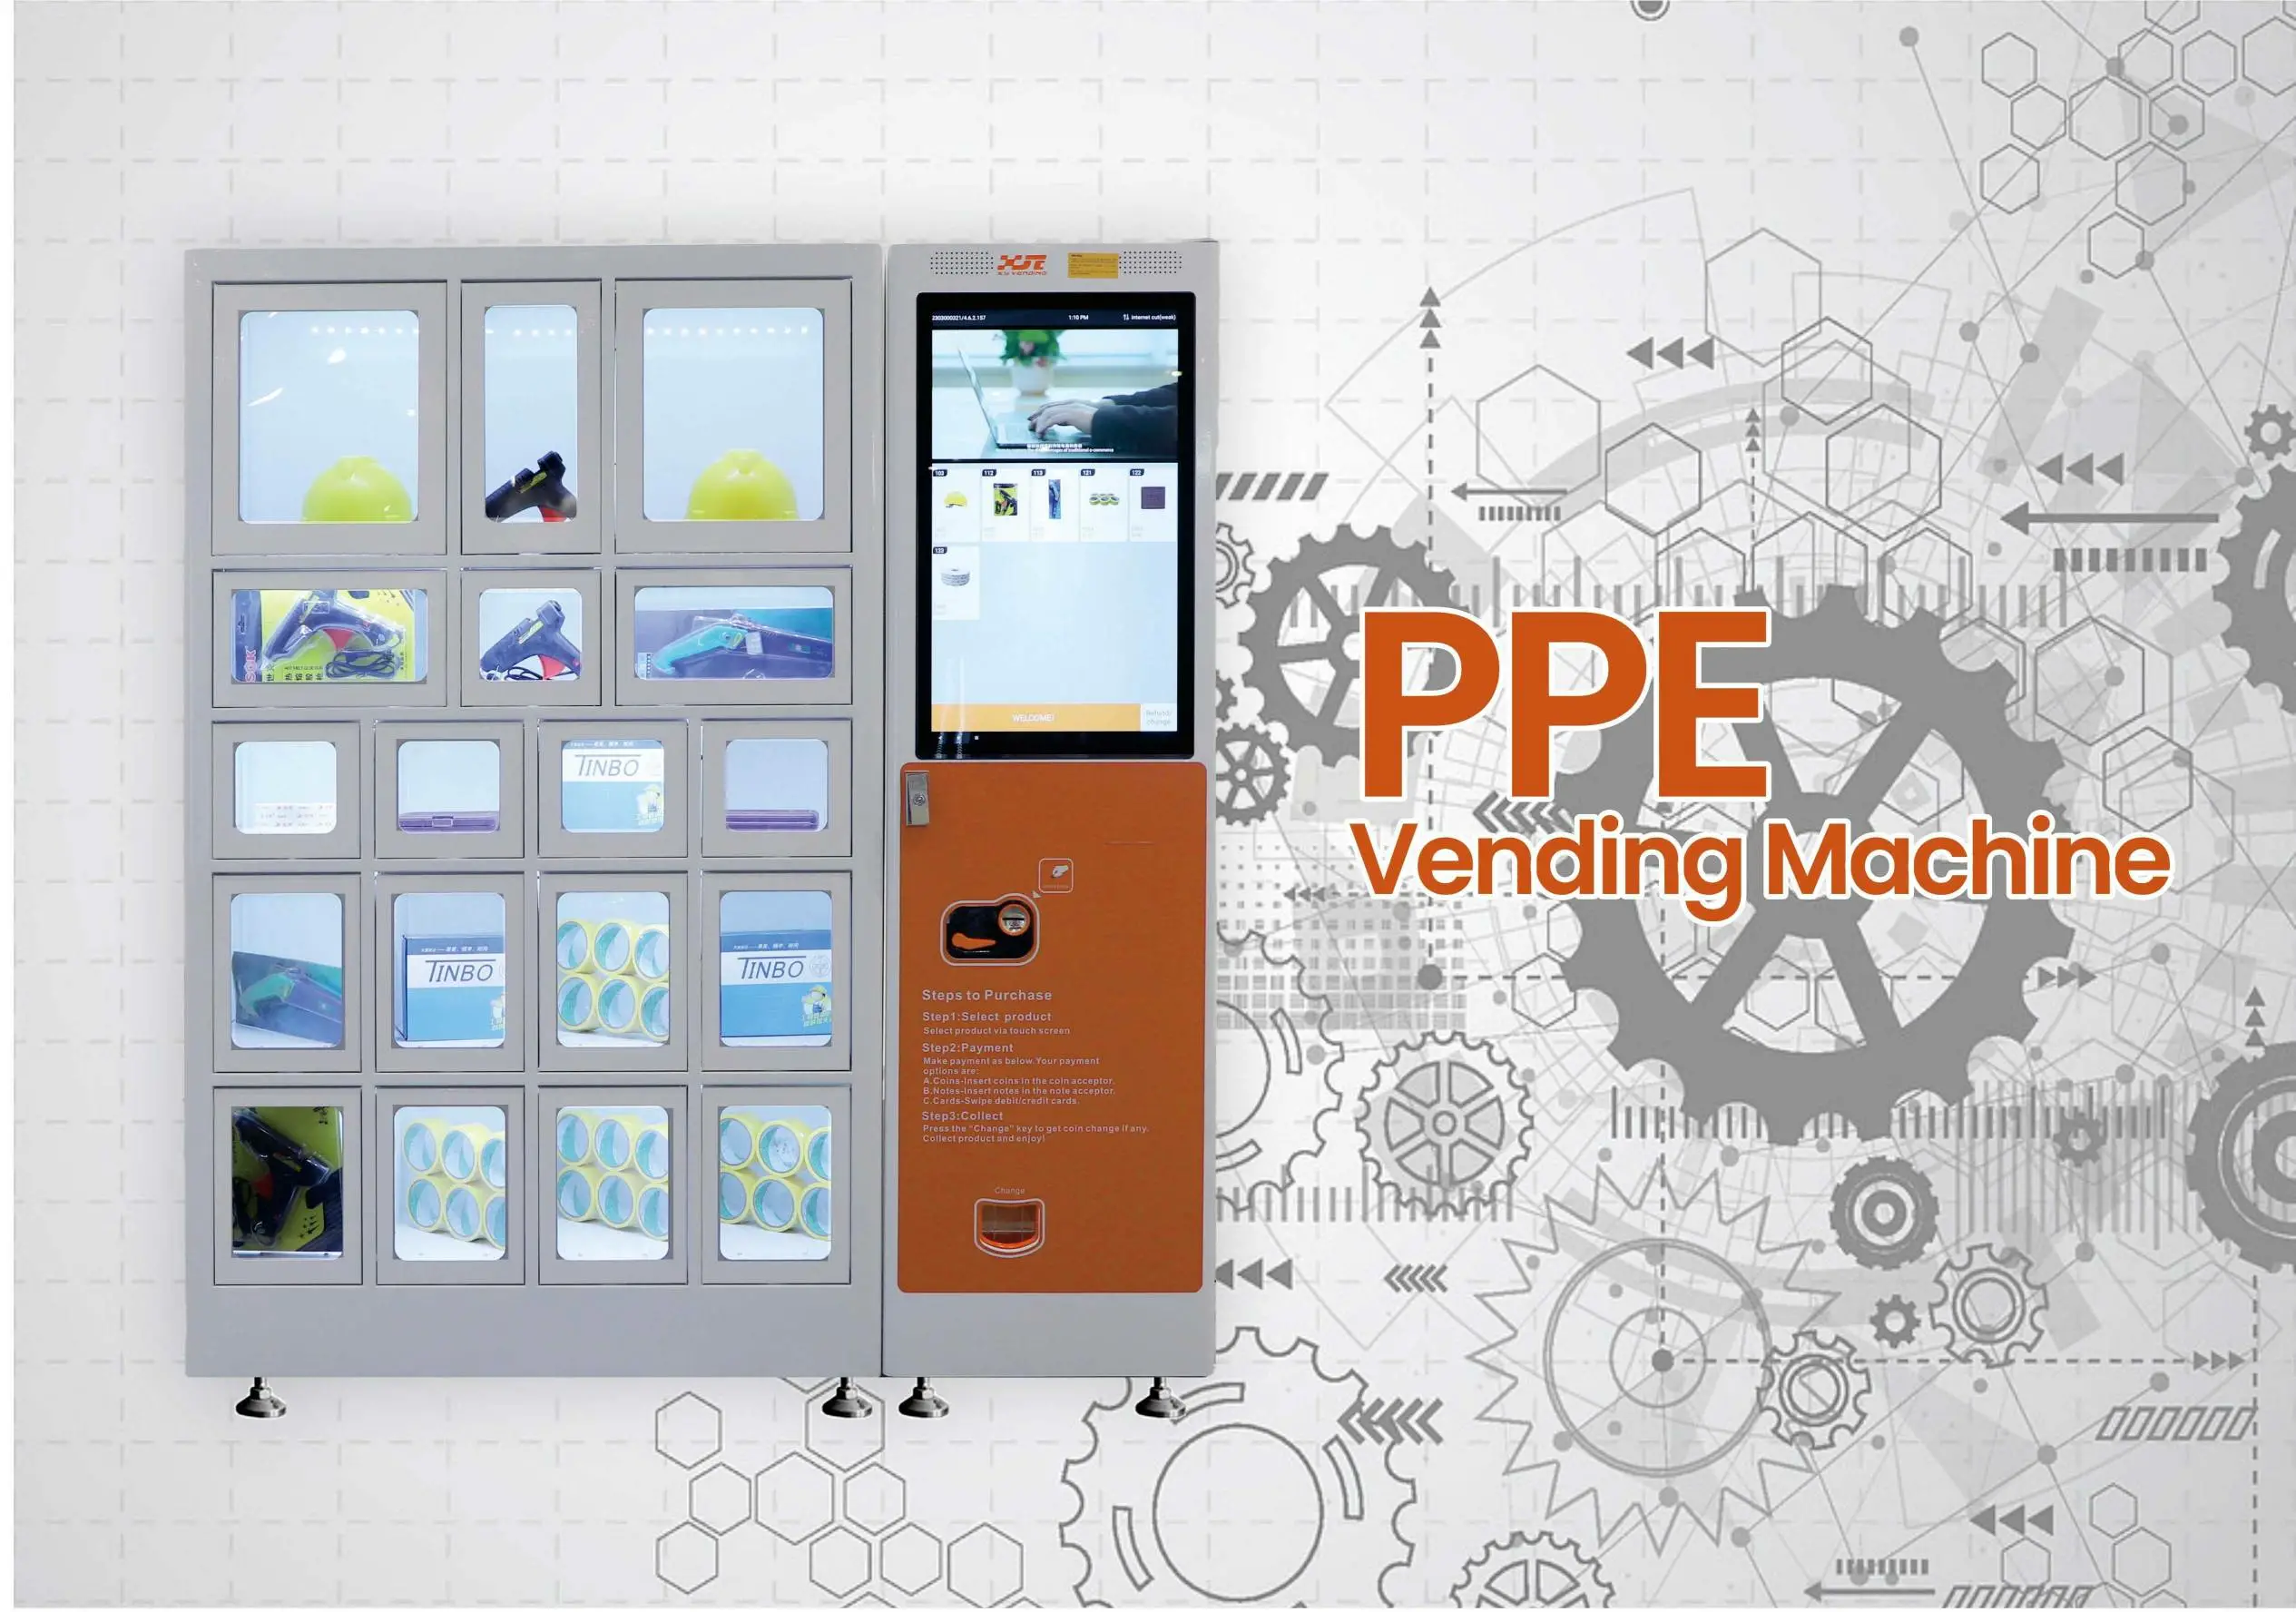 PPE Vending Machine